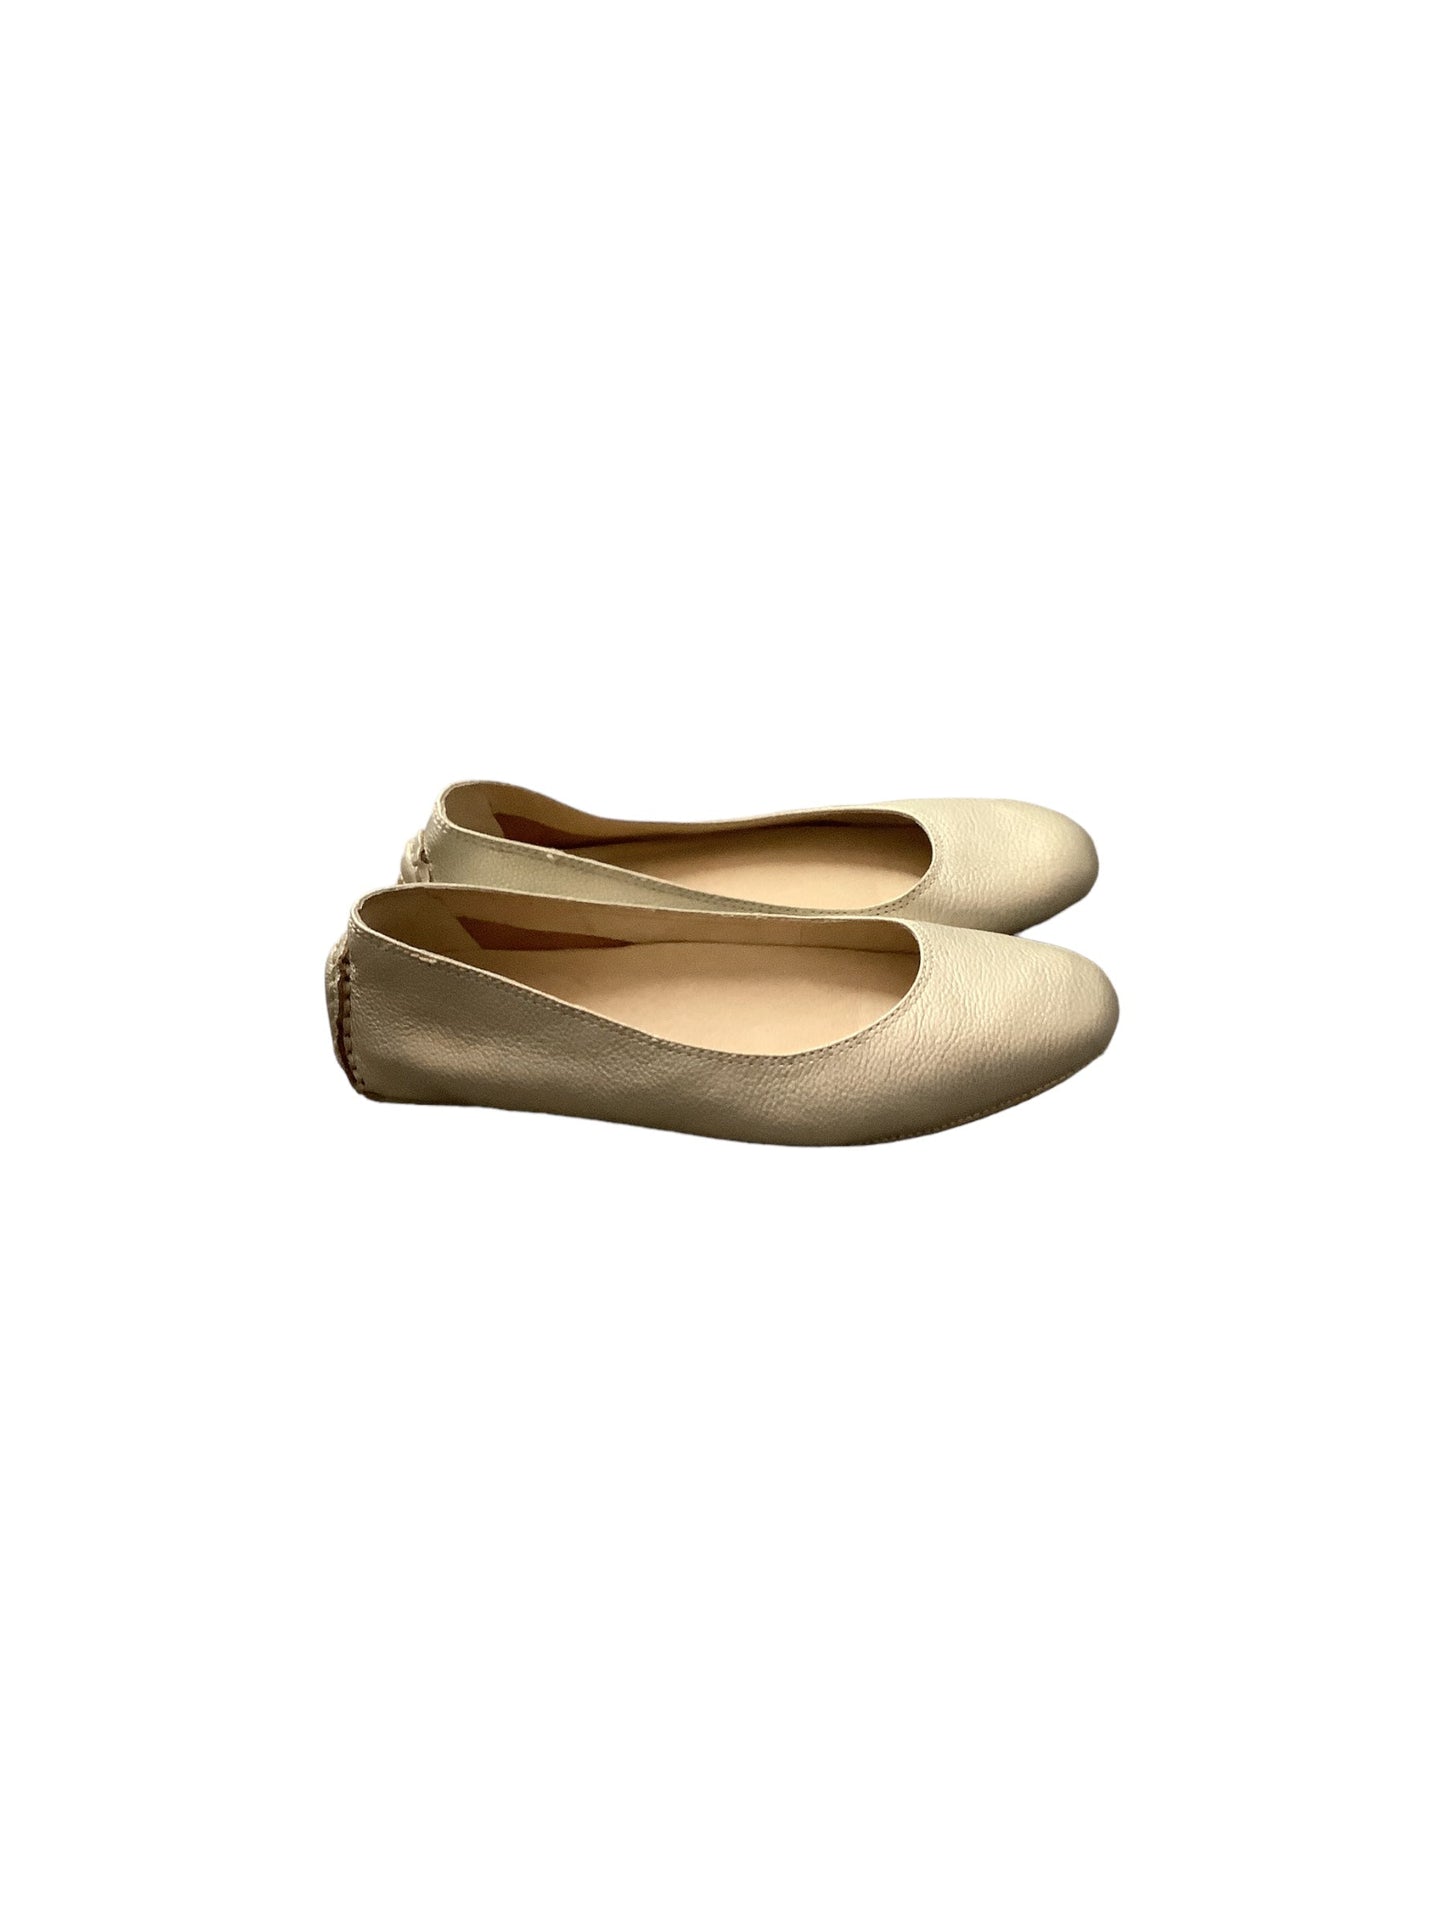 Gold Shoes Flats Ballet Michael By Michael Kors, Size 6